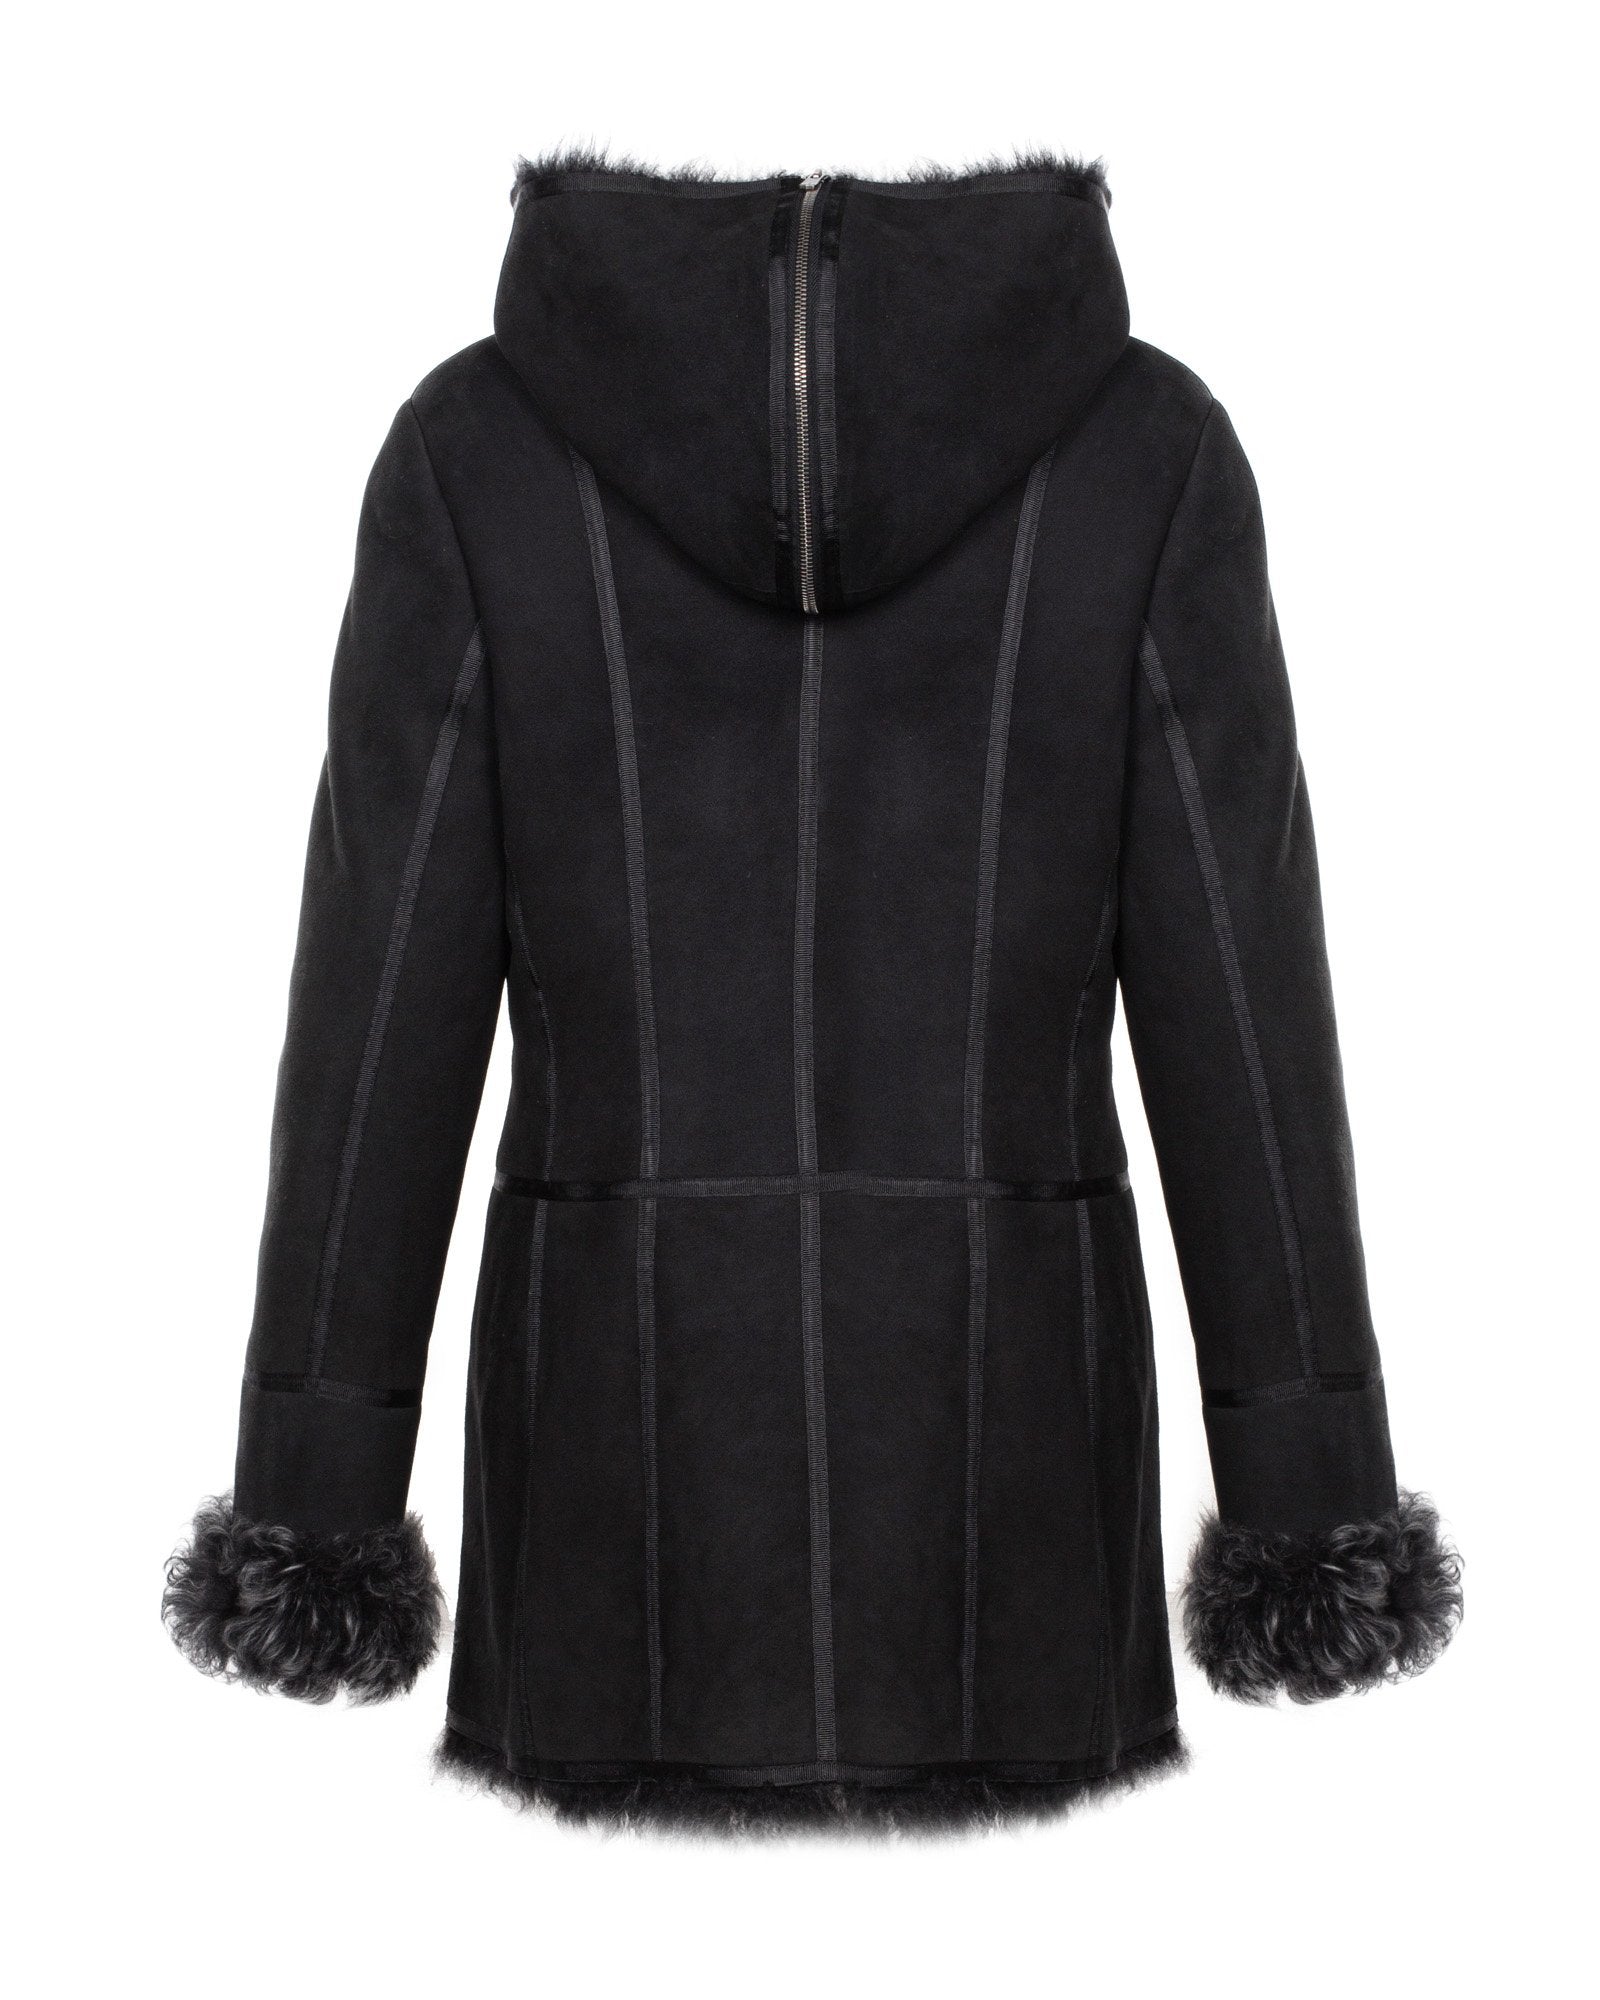 Black Suede Leather Coat